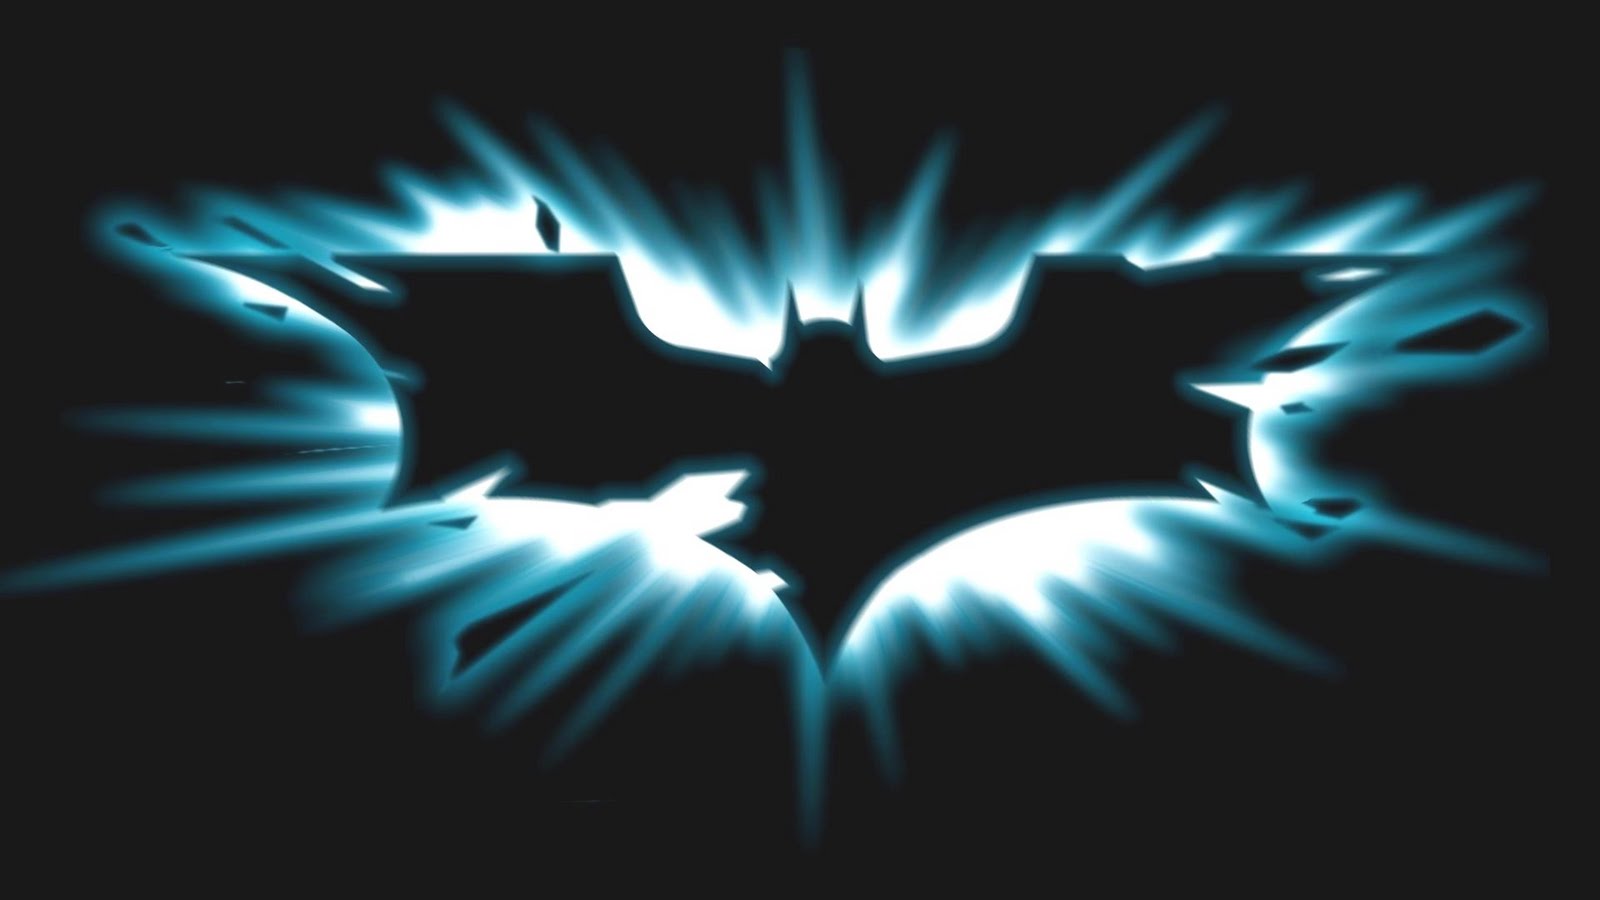 Classic Batman Logo Wallpaper Image Amp Pictures Becuo